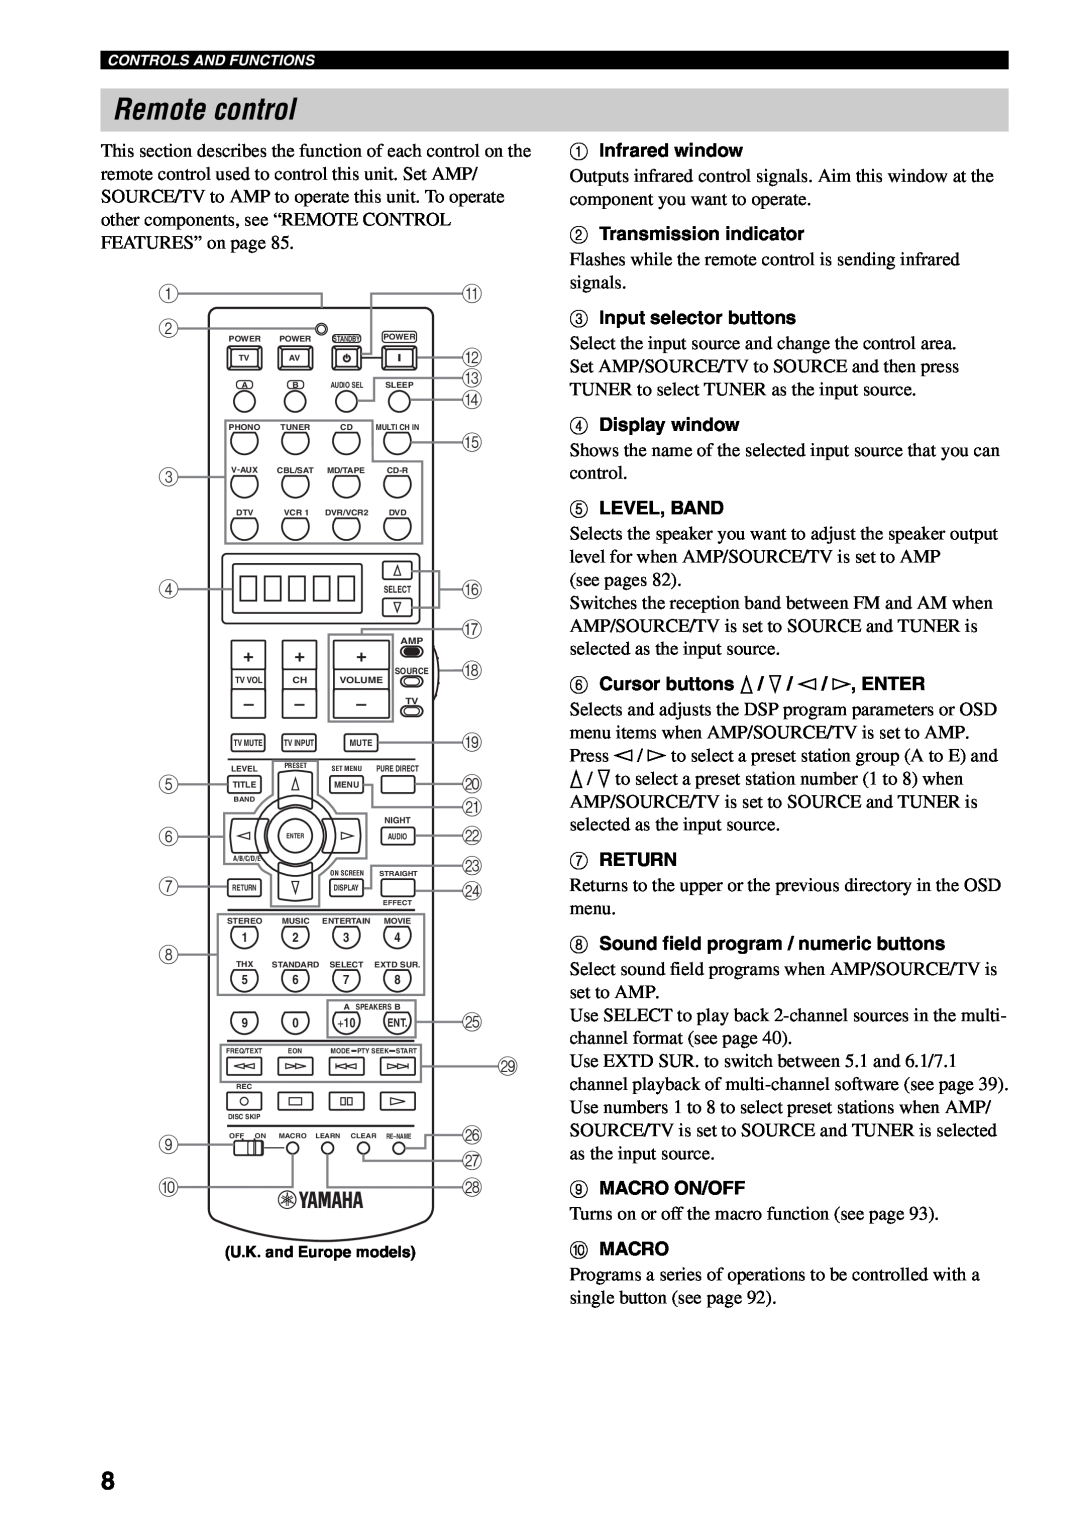 Yamaha RX-V1600 owner manual Remote control, 3 4 5 6 7 8 9 